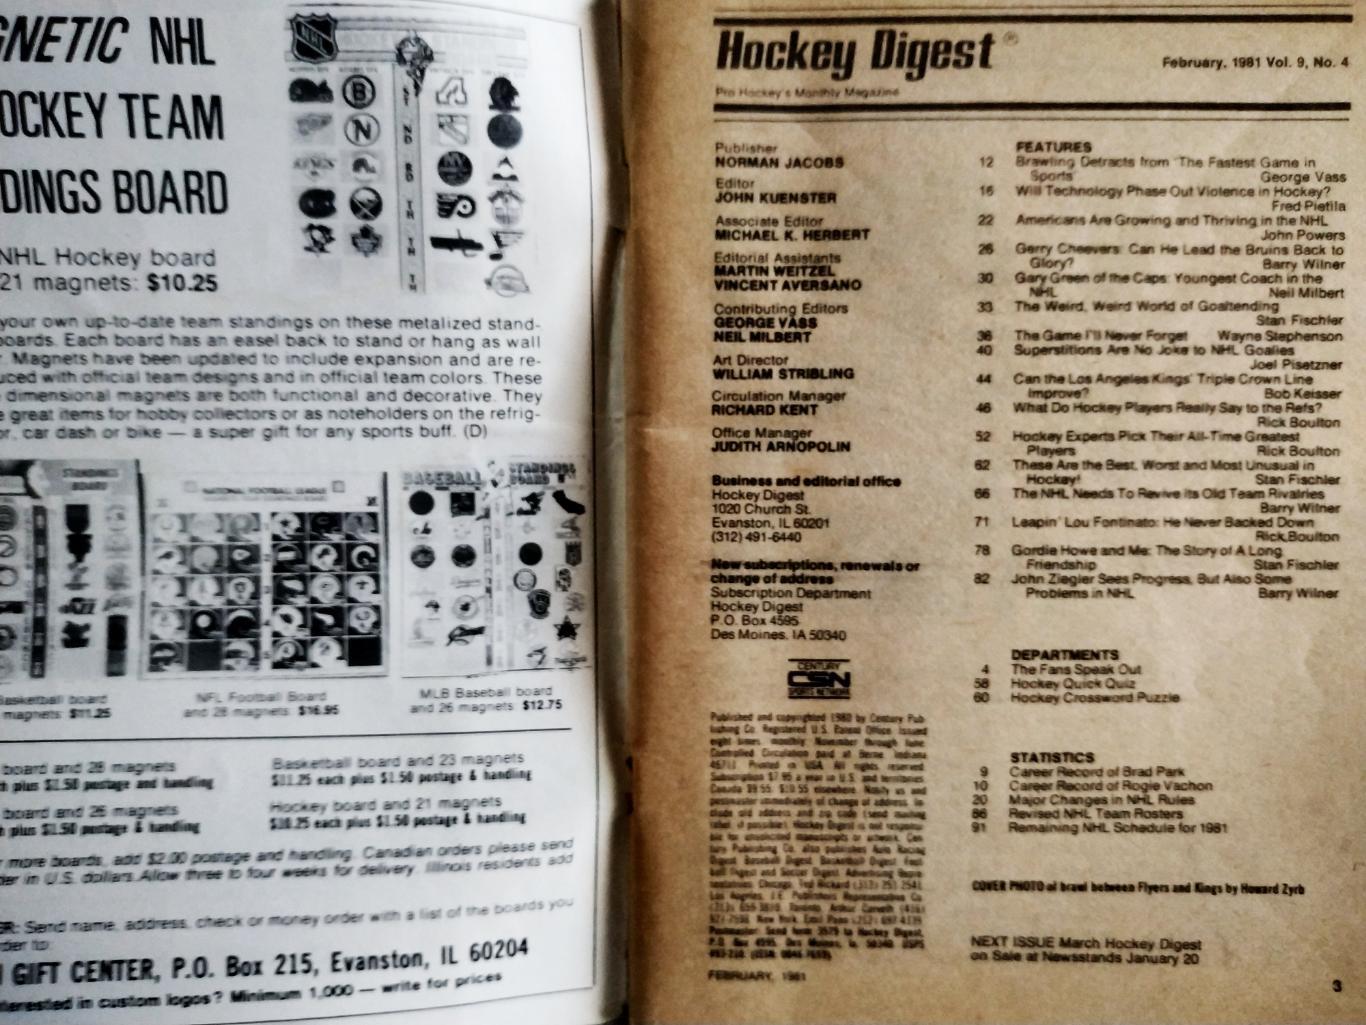 ХОККЕЙ ЖУРНАЛ ЕЖЕМЕСЯЧНИК НХЛ ХОККИ ДАЙДЖЕСТ NHL FEBRUARY 1981 THE HOCKEY DIGEST 1